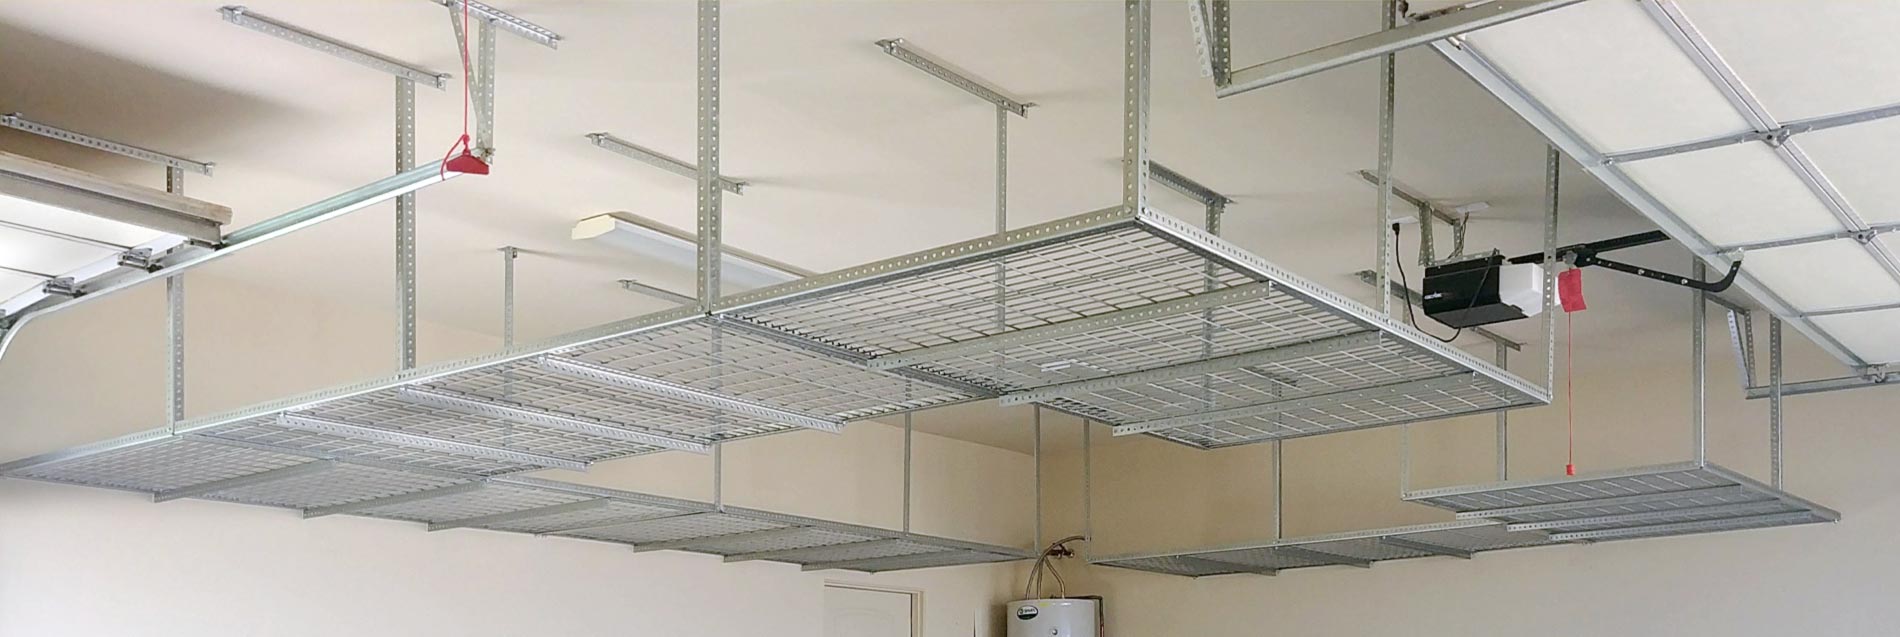 Overhead Garage Storage Rack - DIY Install